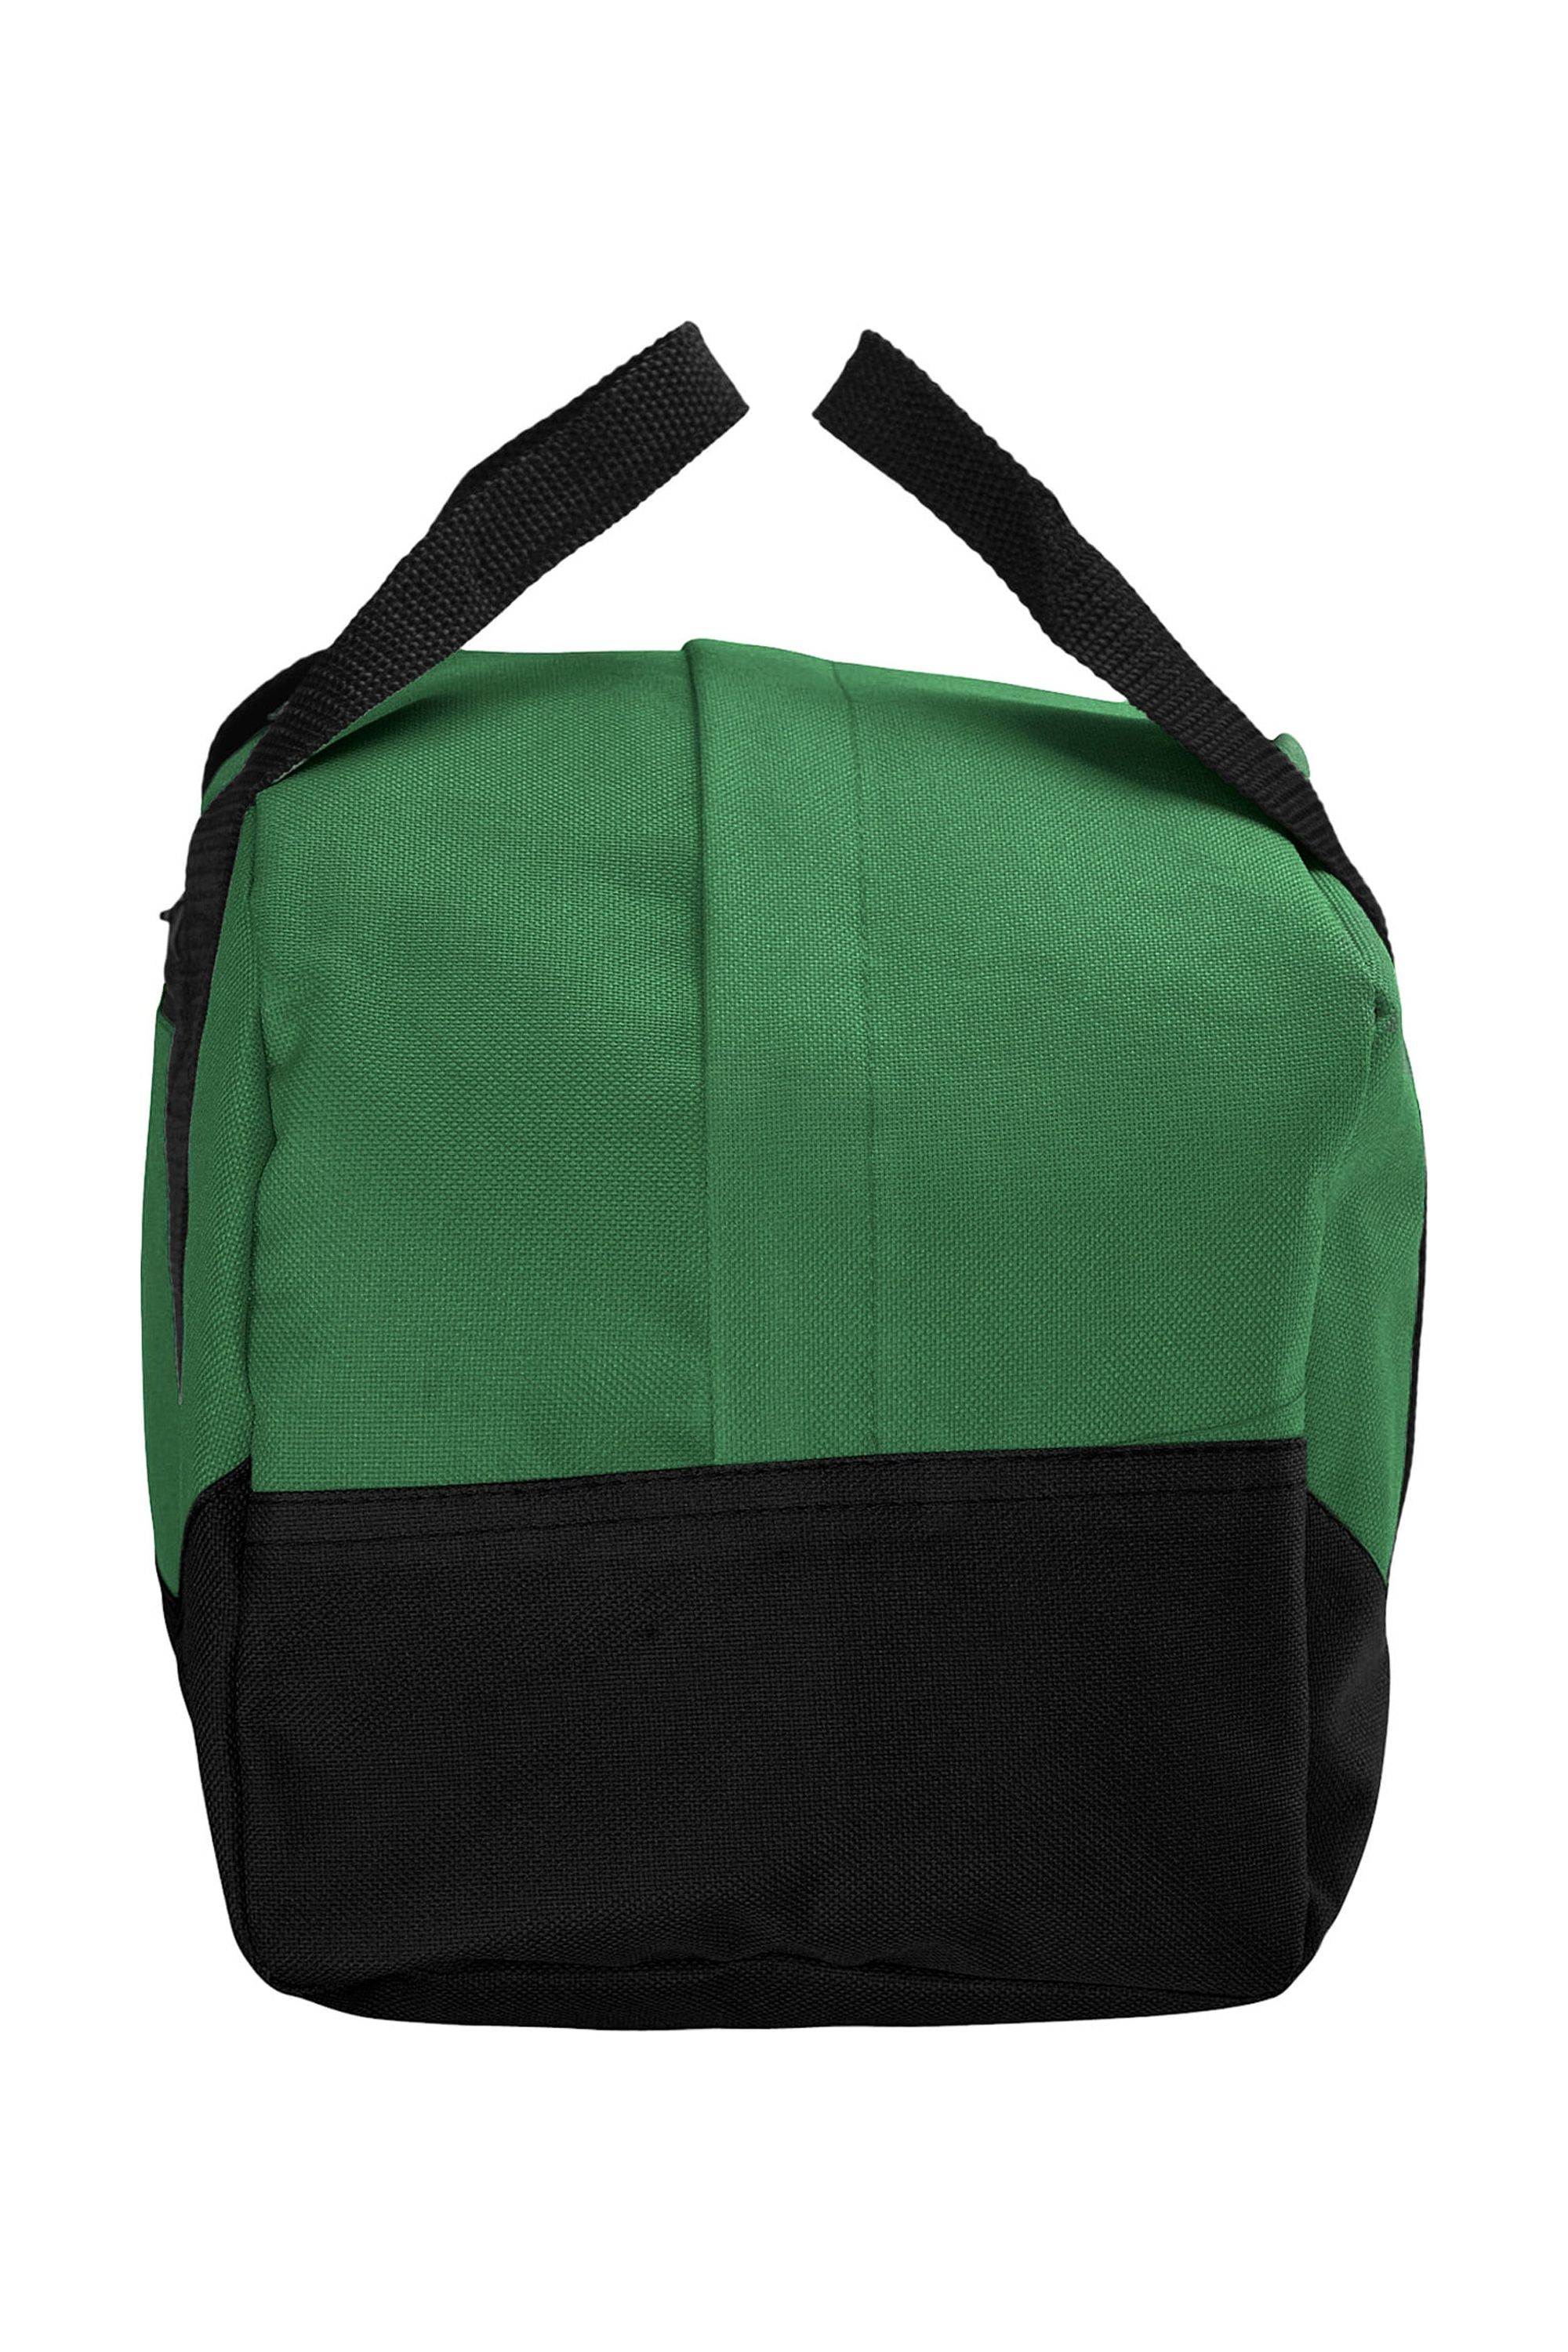 DALIX 12" Mini Two Tone Duffle Bag (Dark Green) - image 5 of 7